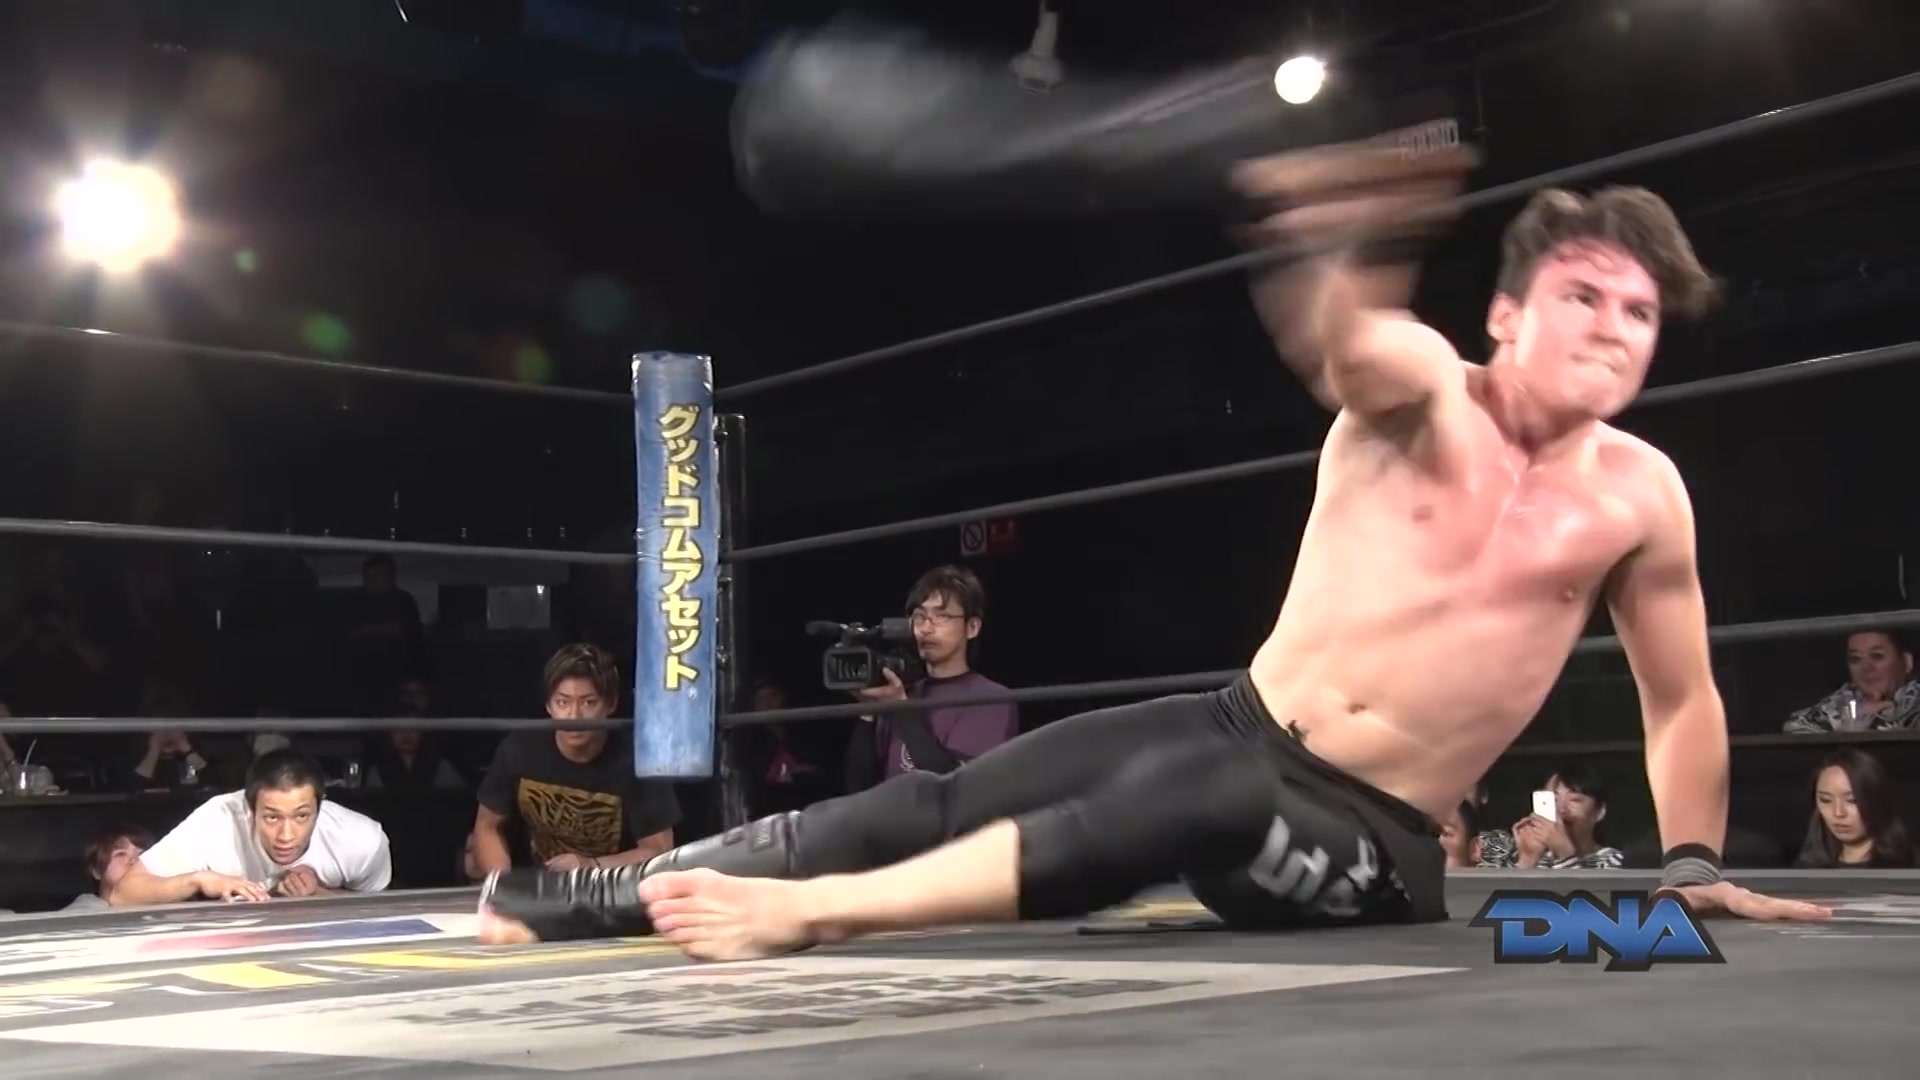 Enraged Wrestler Reveals His Foot, Raining Down Kicks